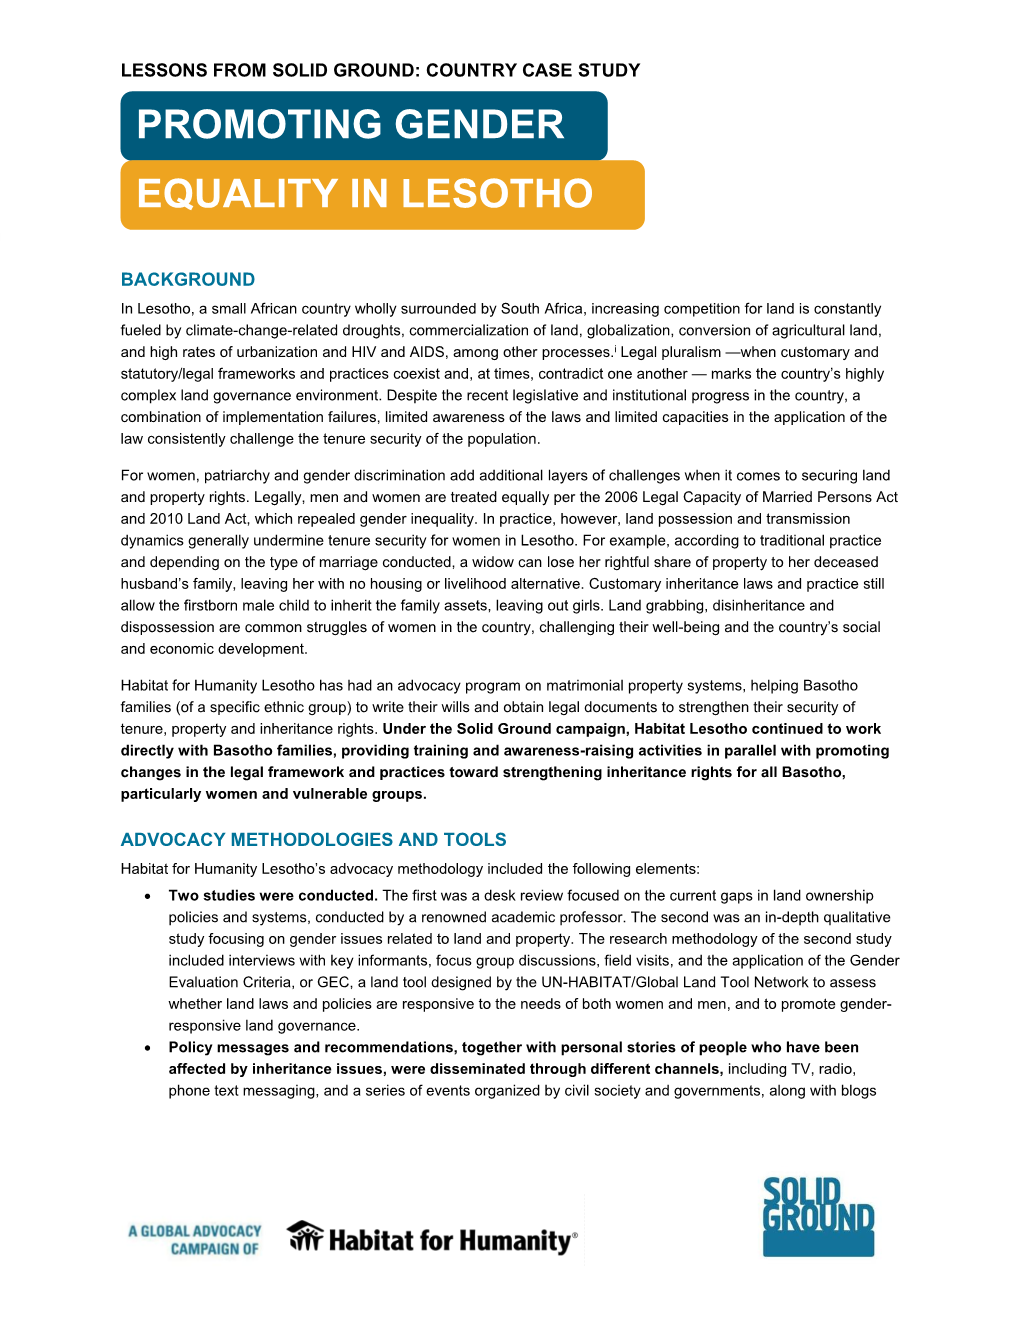 Promoting Gender Equality in Lesotho